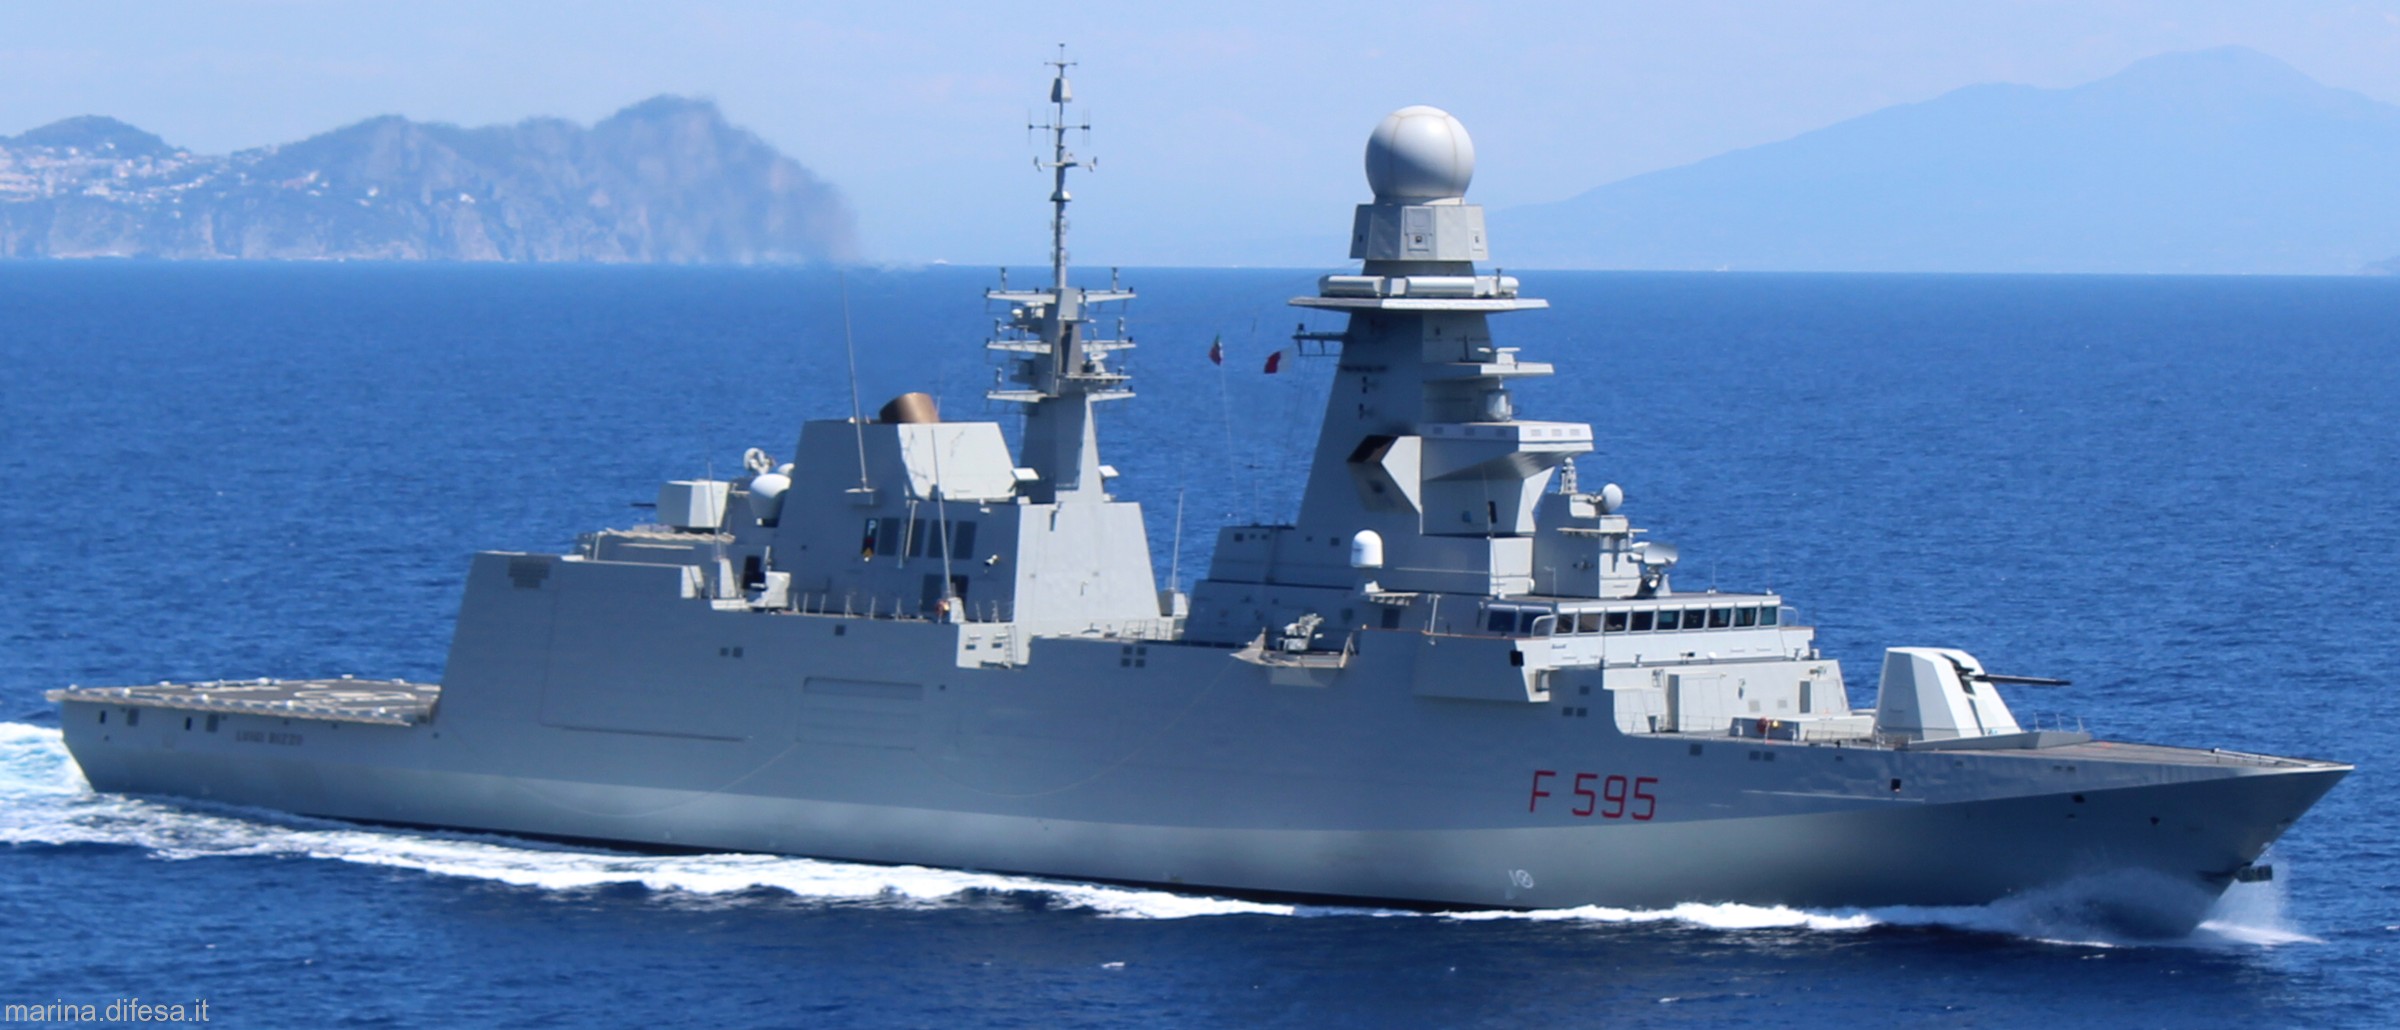 f-595 luigi rizzo its nave bergamini fremm class guided missile frigate italian navy marina militare 19